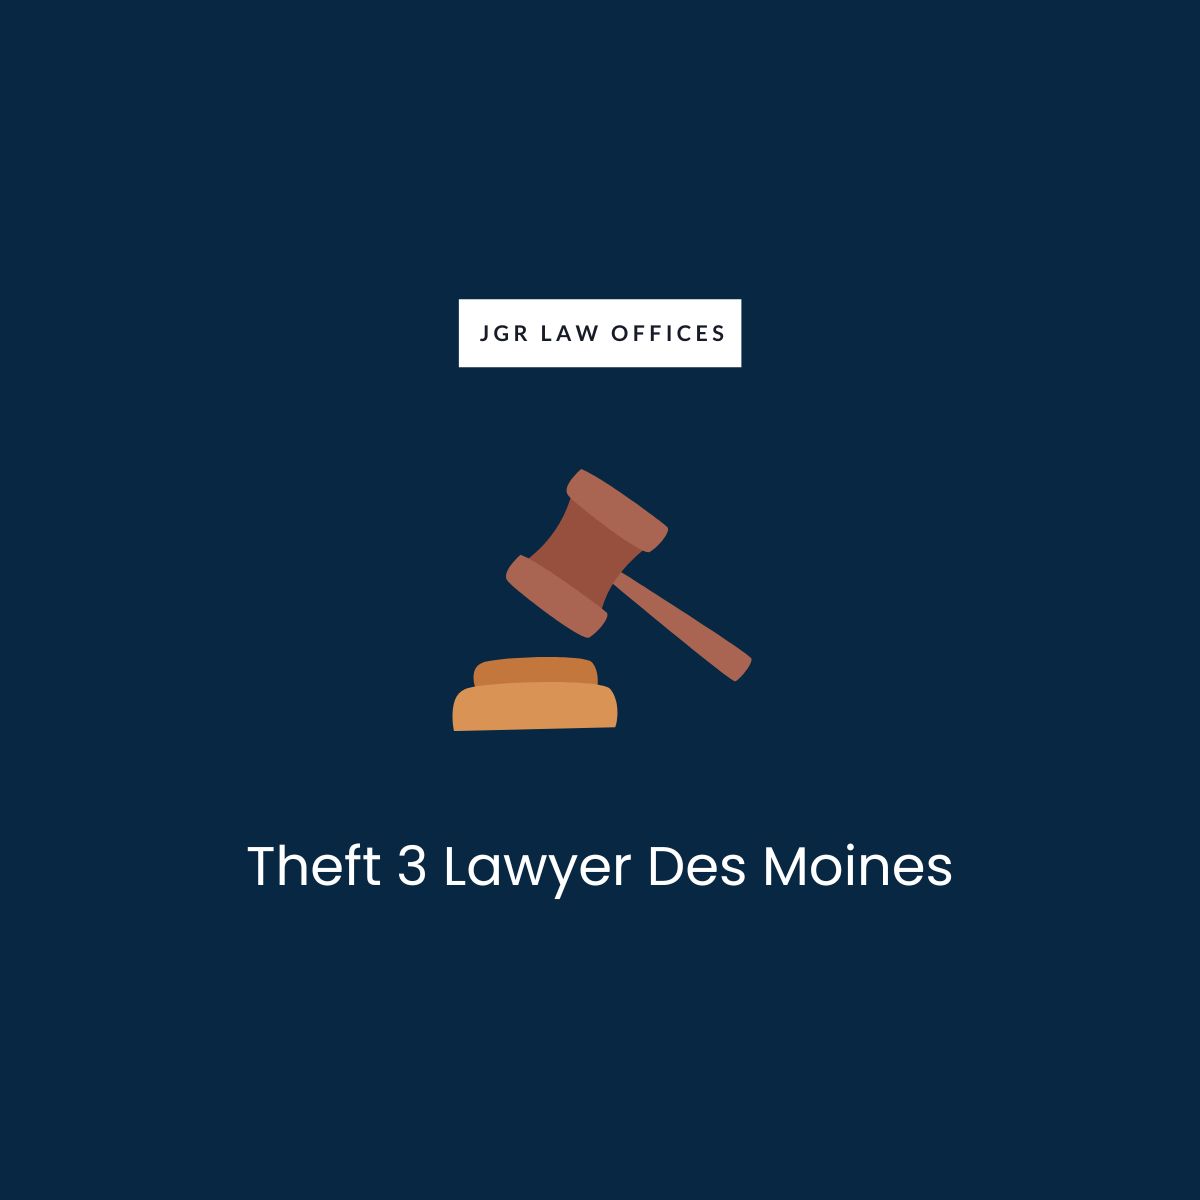 Theft 3 Attorney Des Moines